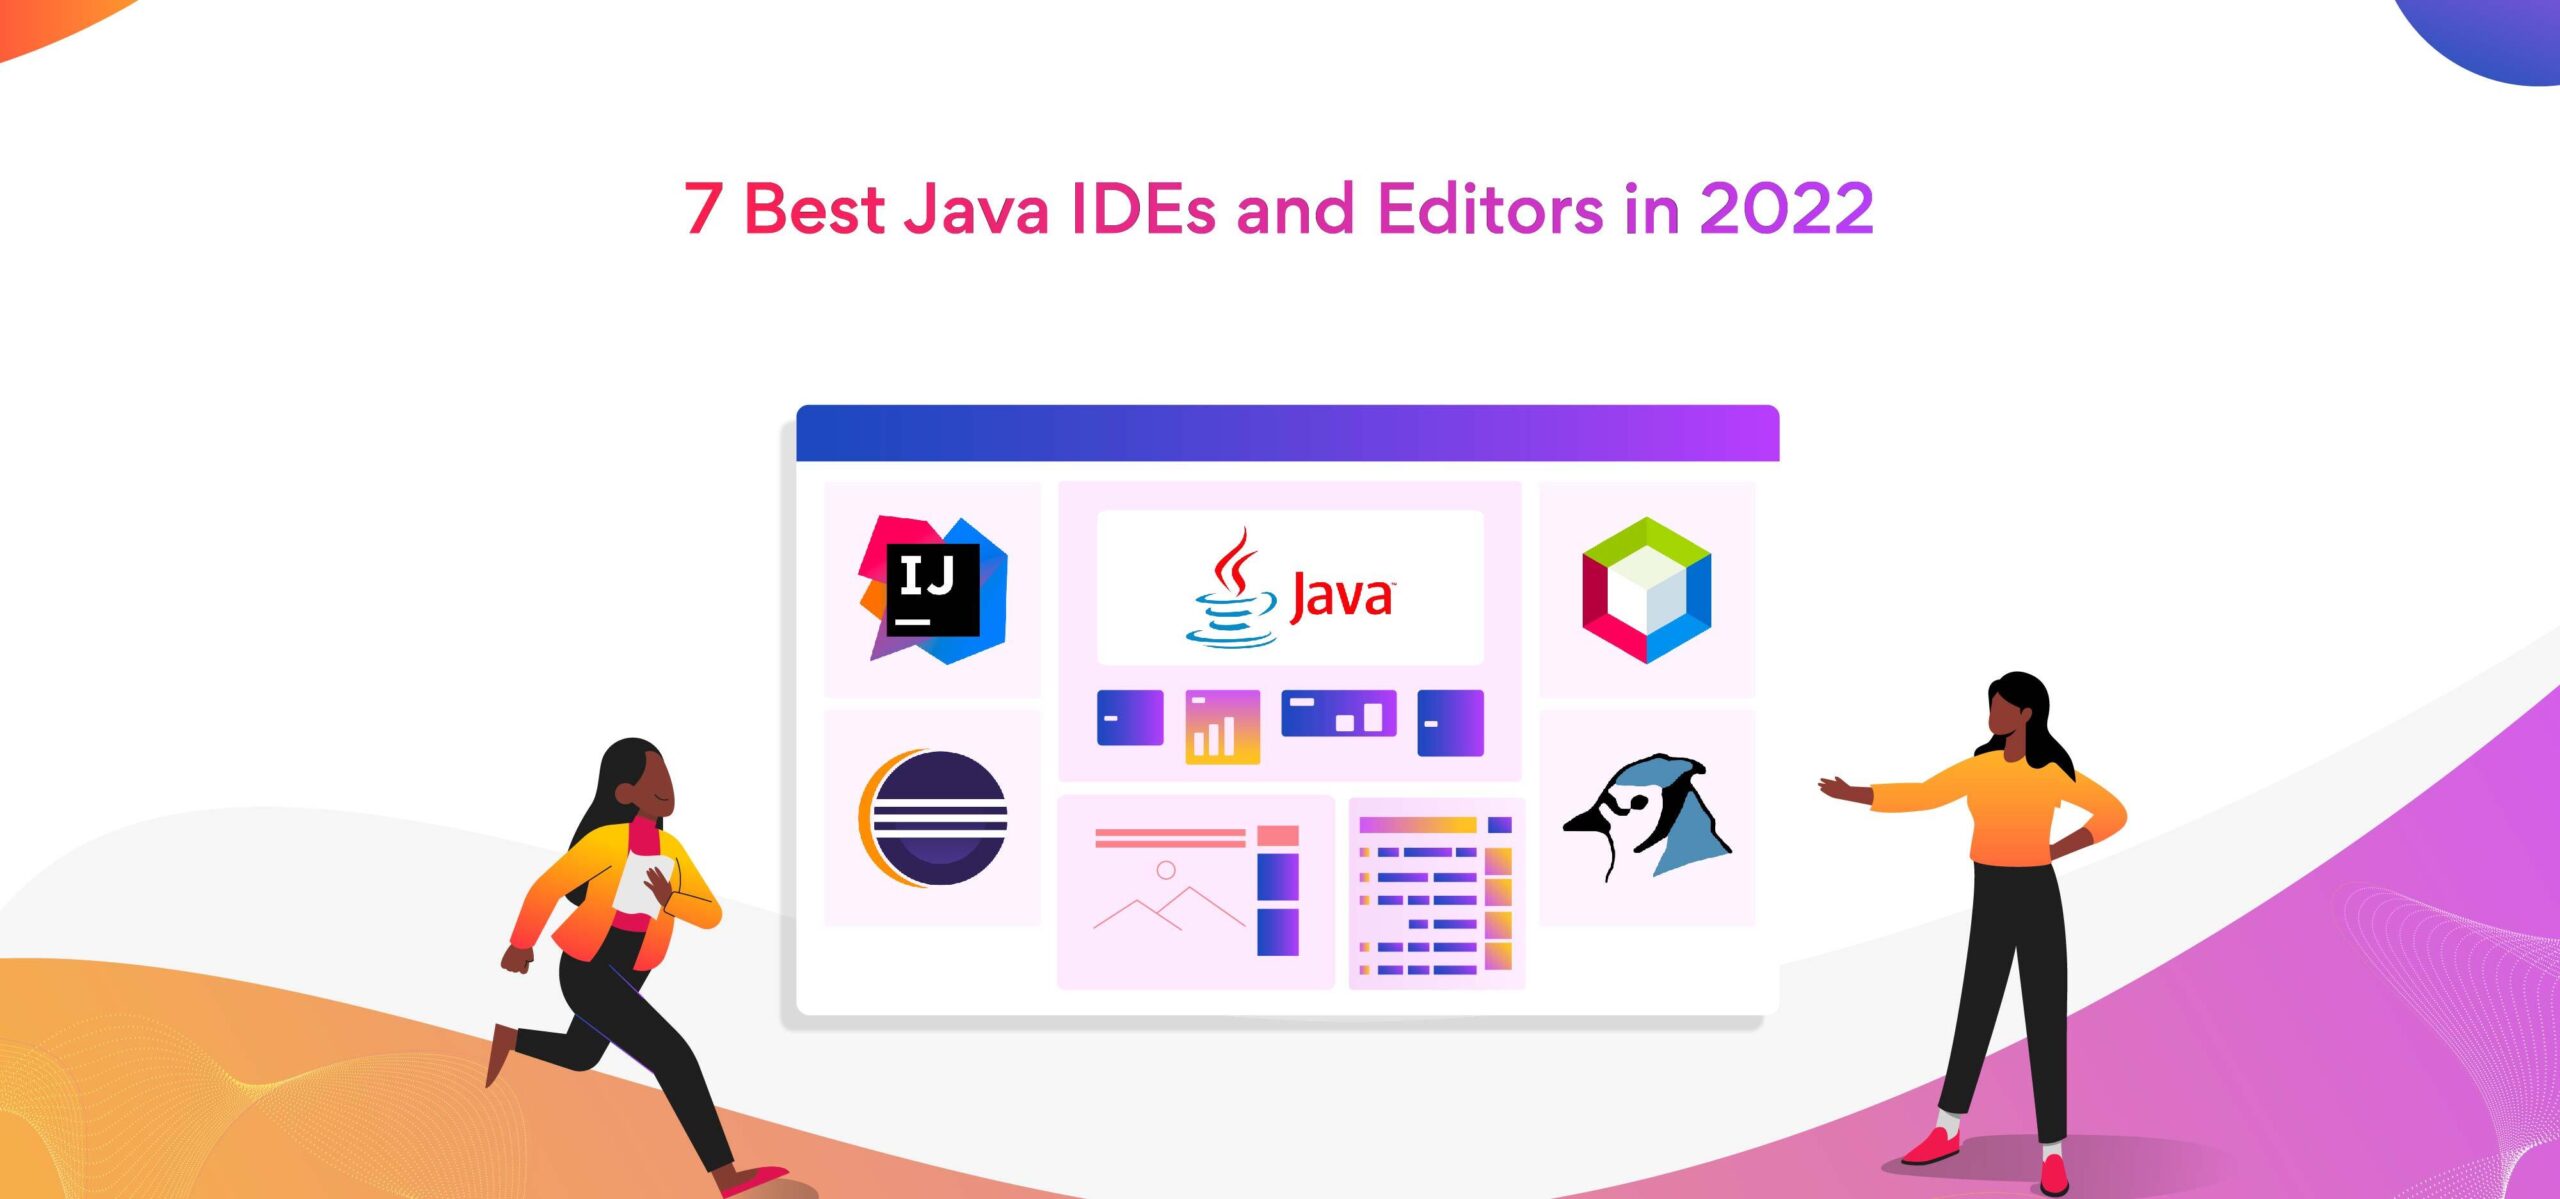 Java IDEs and Editors